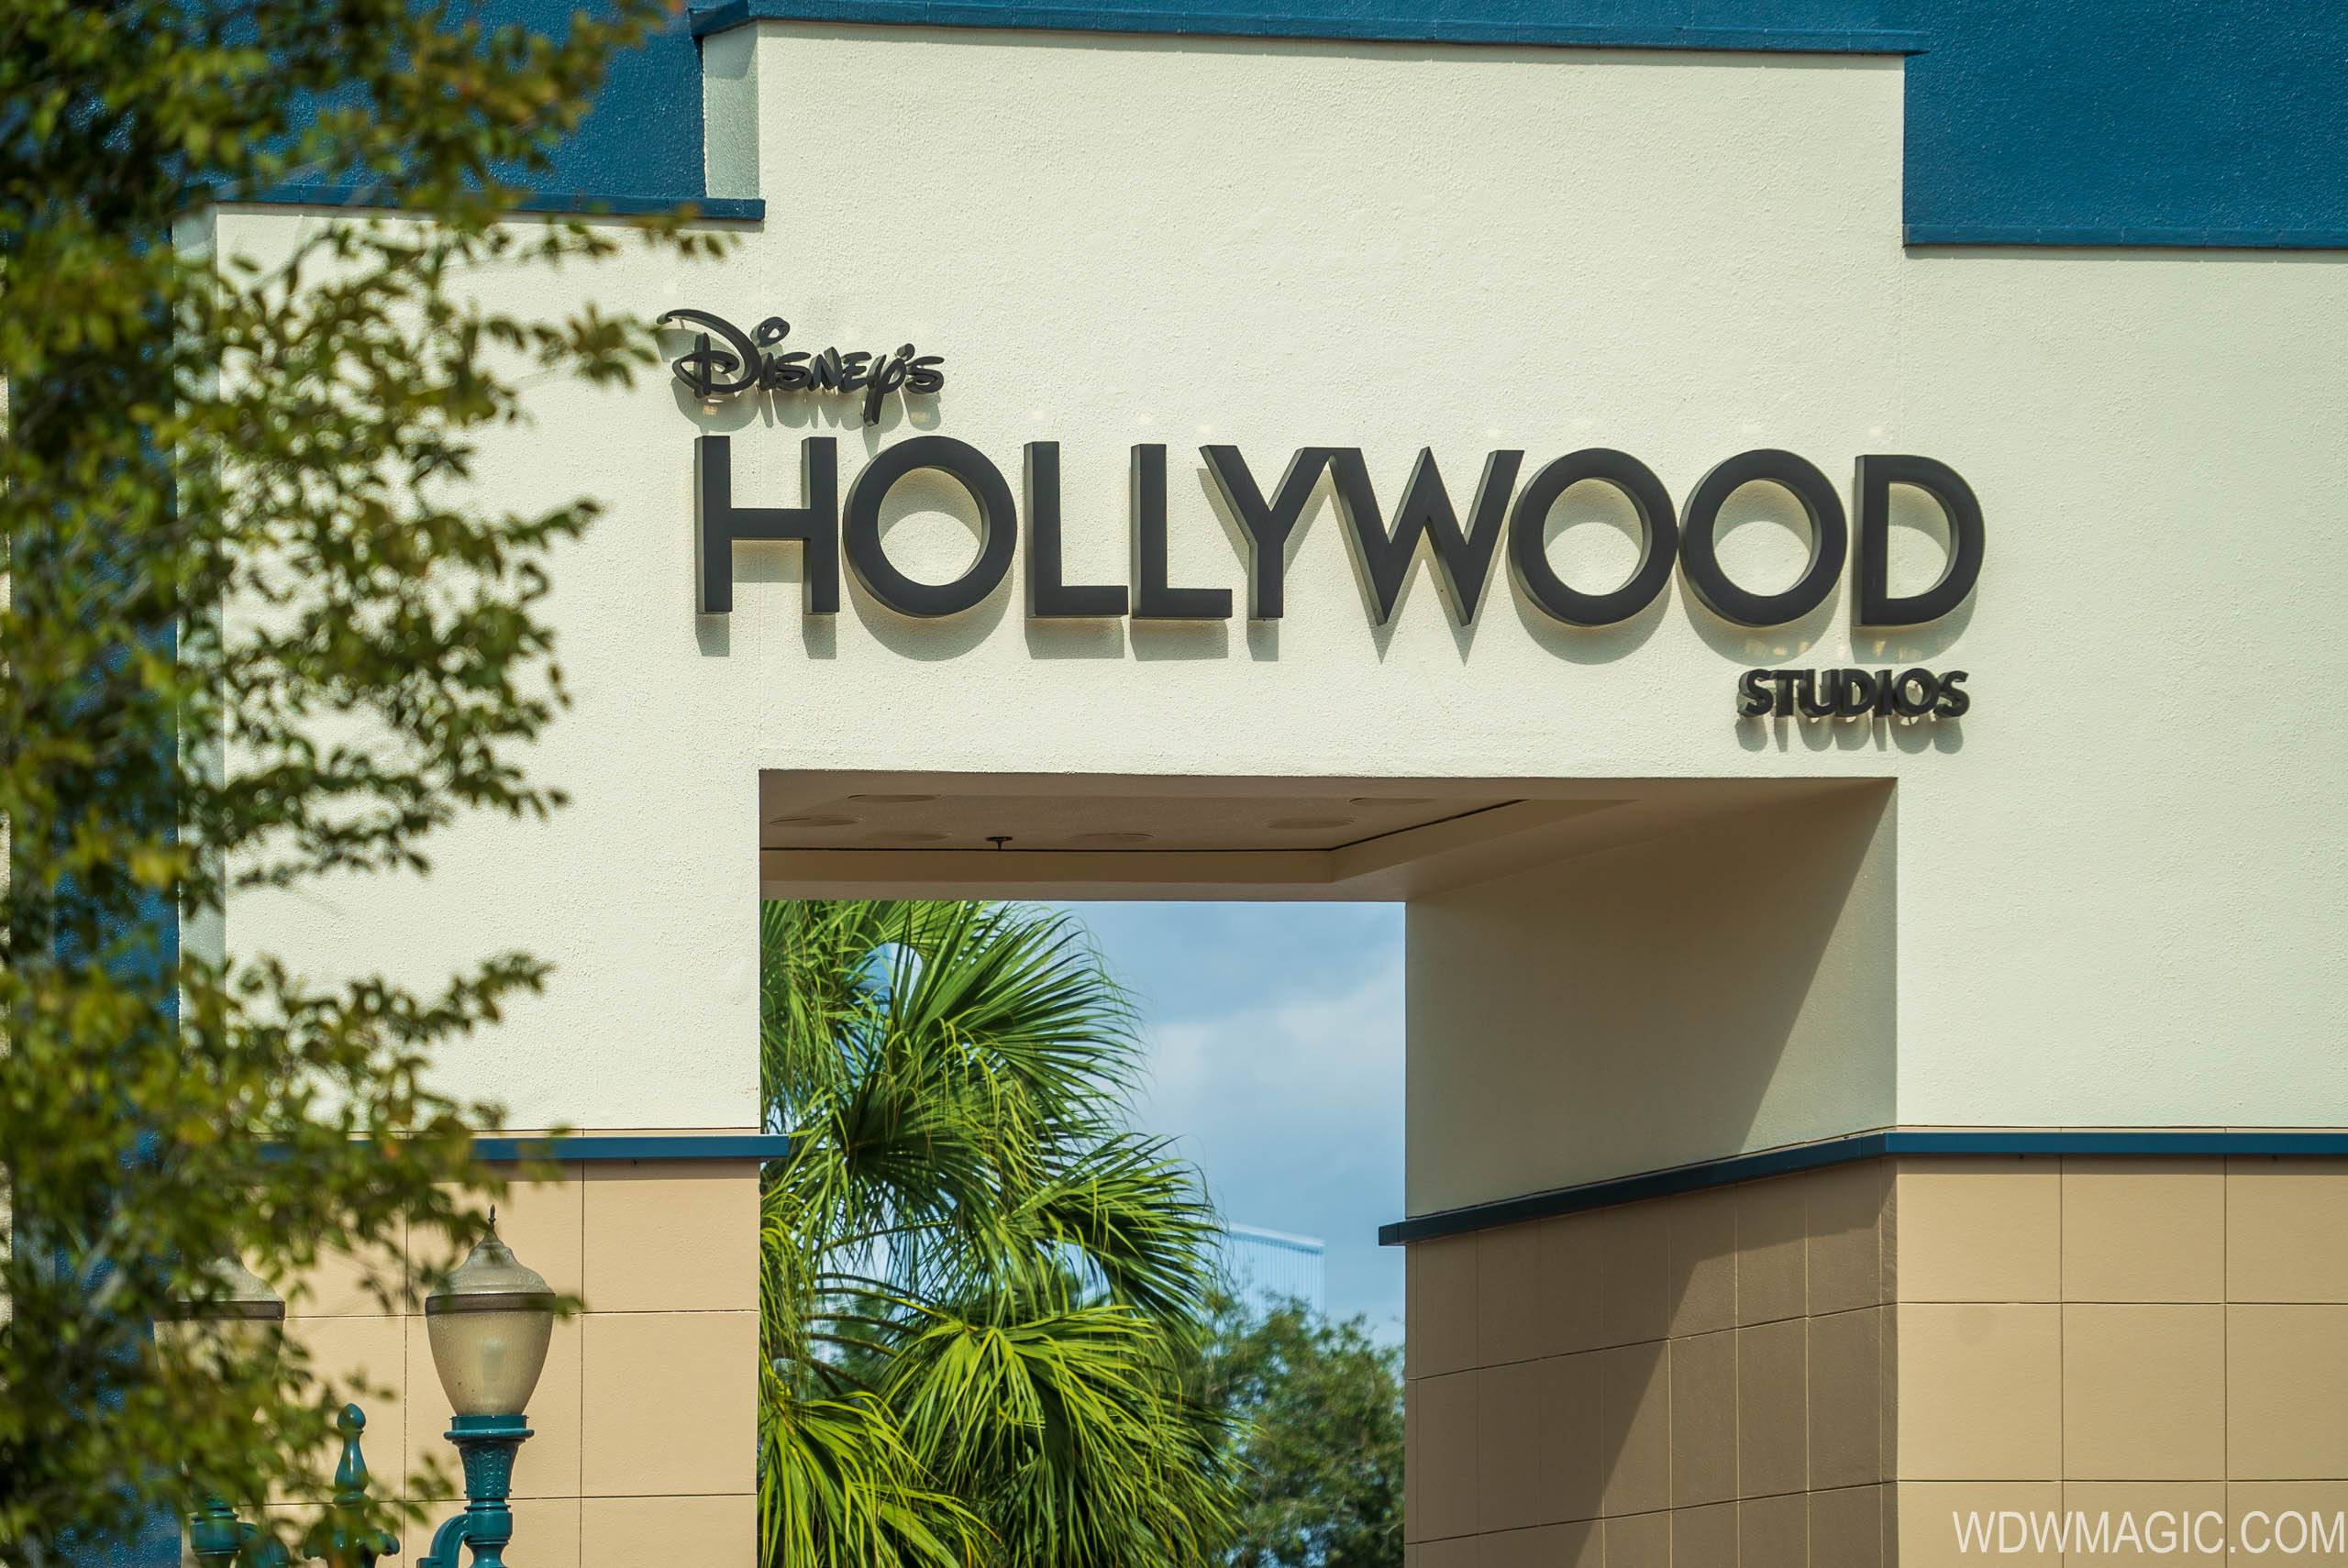 PHOTOS - Disney's Hollywood Studios archway with new logo